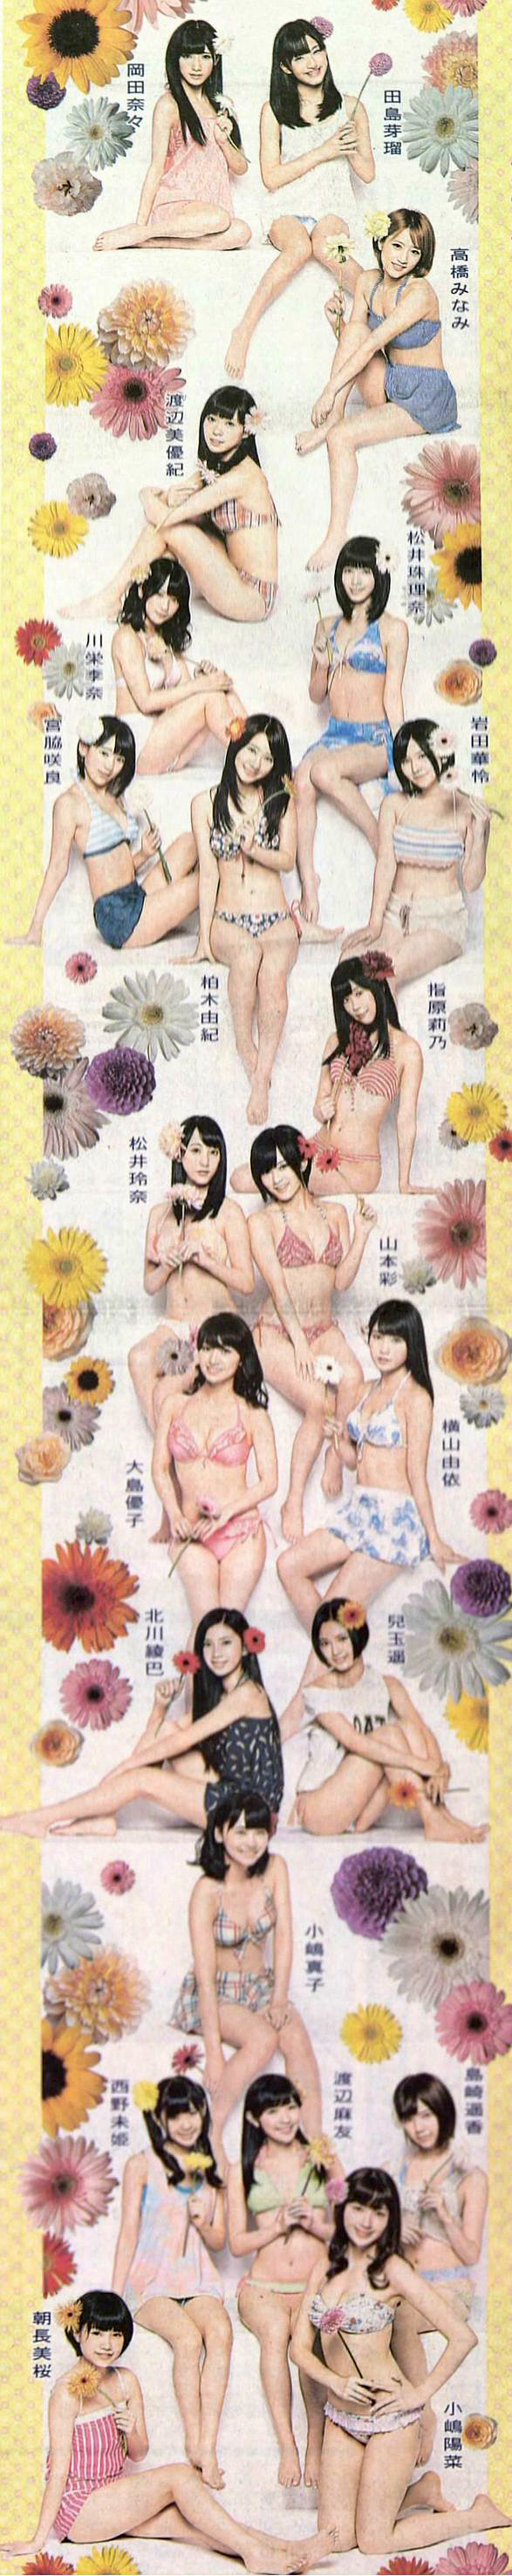 Kalender Terbaru AKB48 2 [JMusicID]